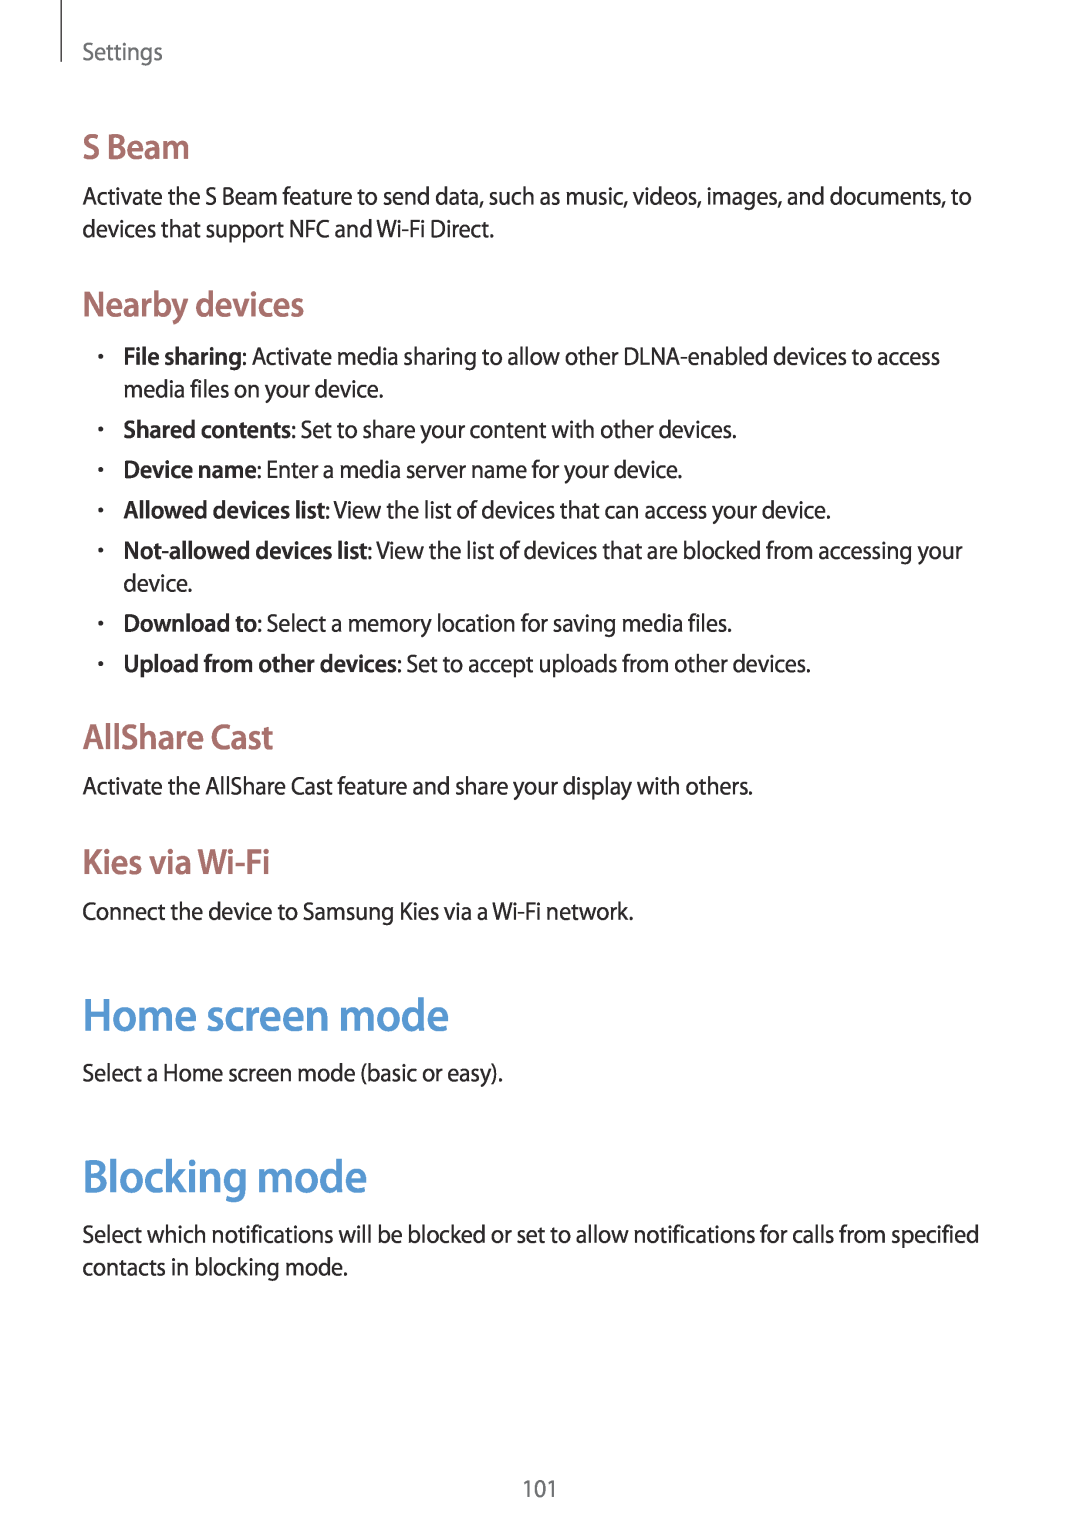 Samsung GT-I8730ZWATMN Home screen mode, Blocking mode, S Beam, Nearby devices, AllShare Cast, Kies via Wi-Fi, Settings 